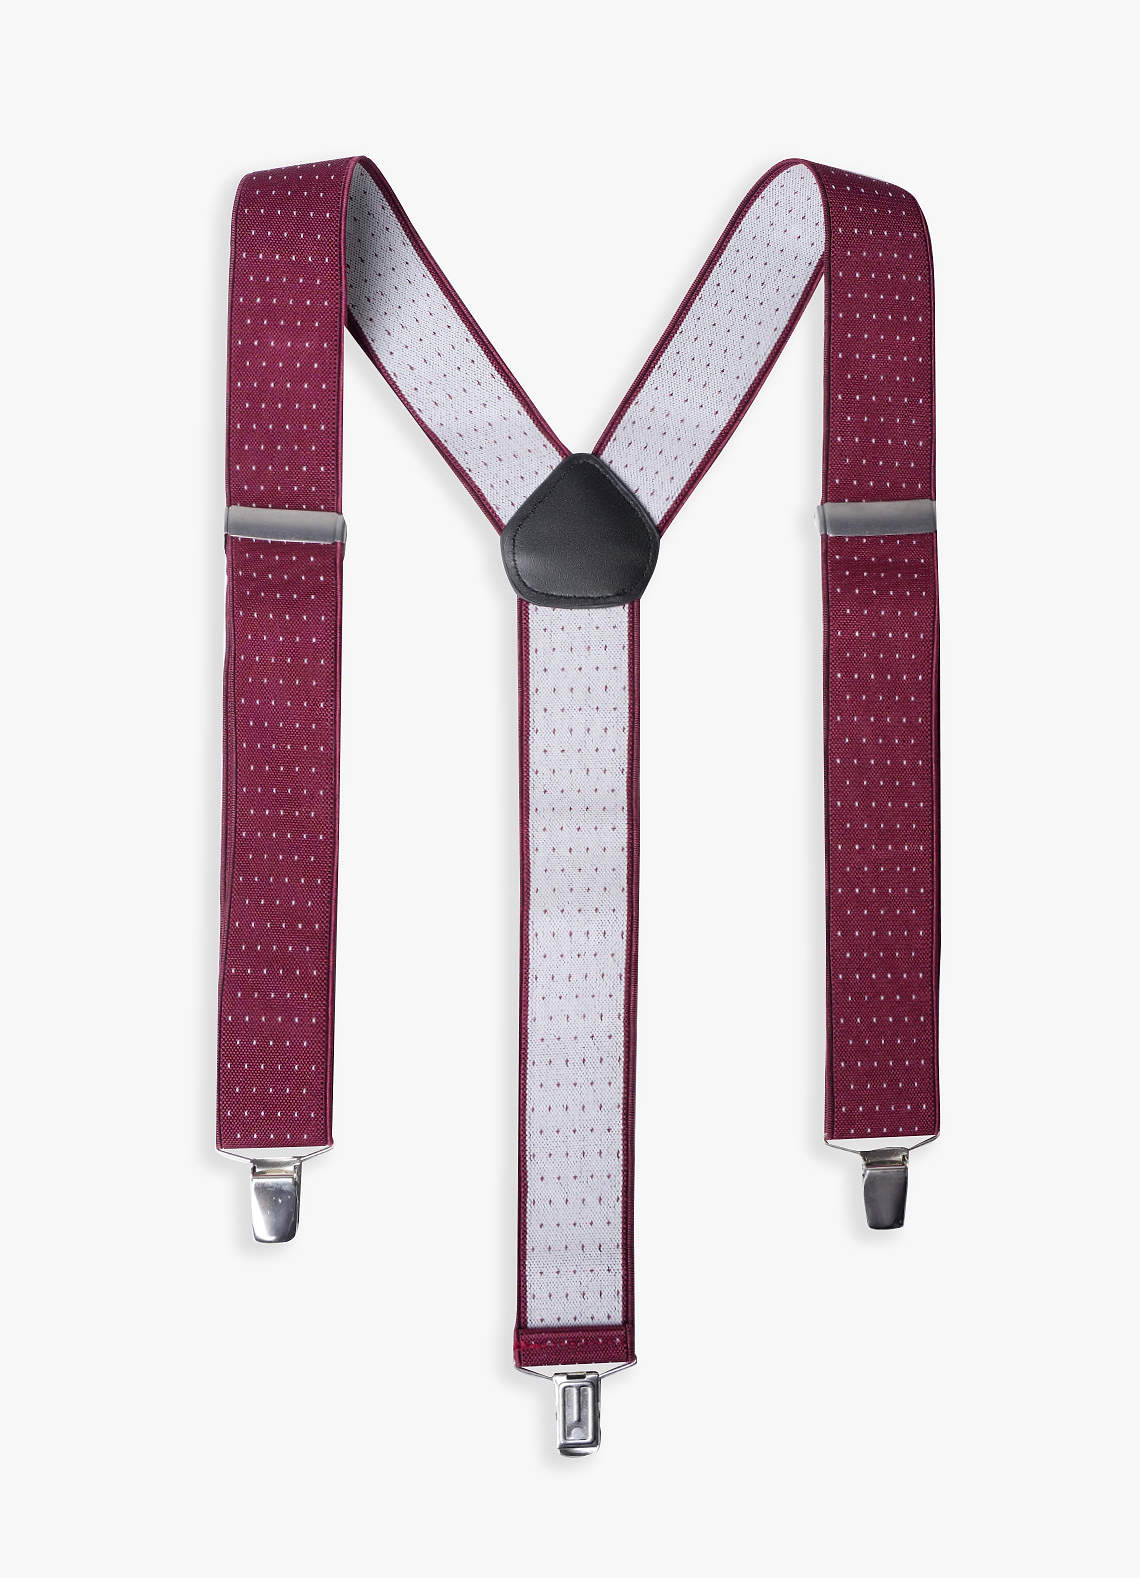 Suspender Clips - White, Accessories